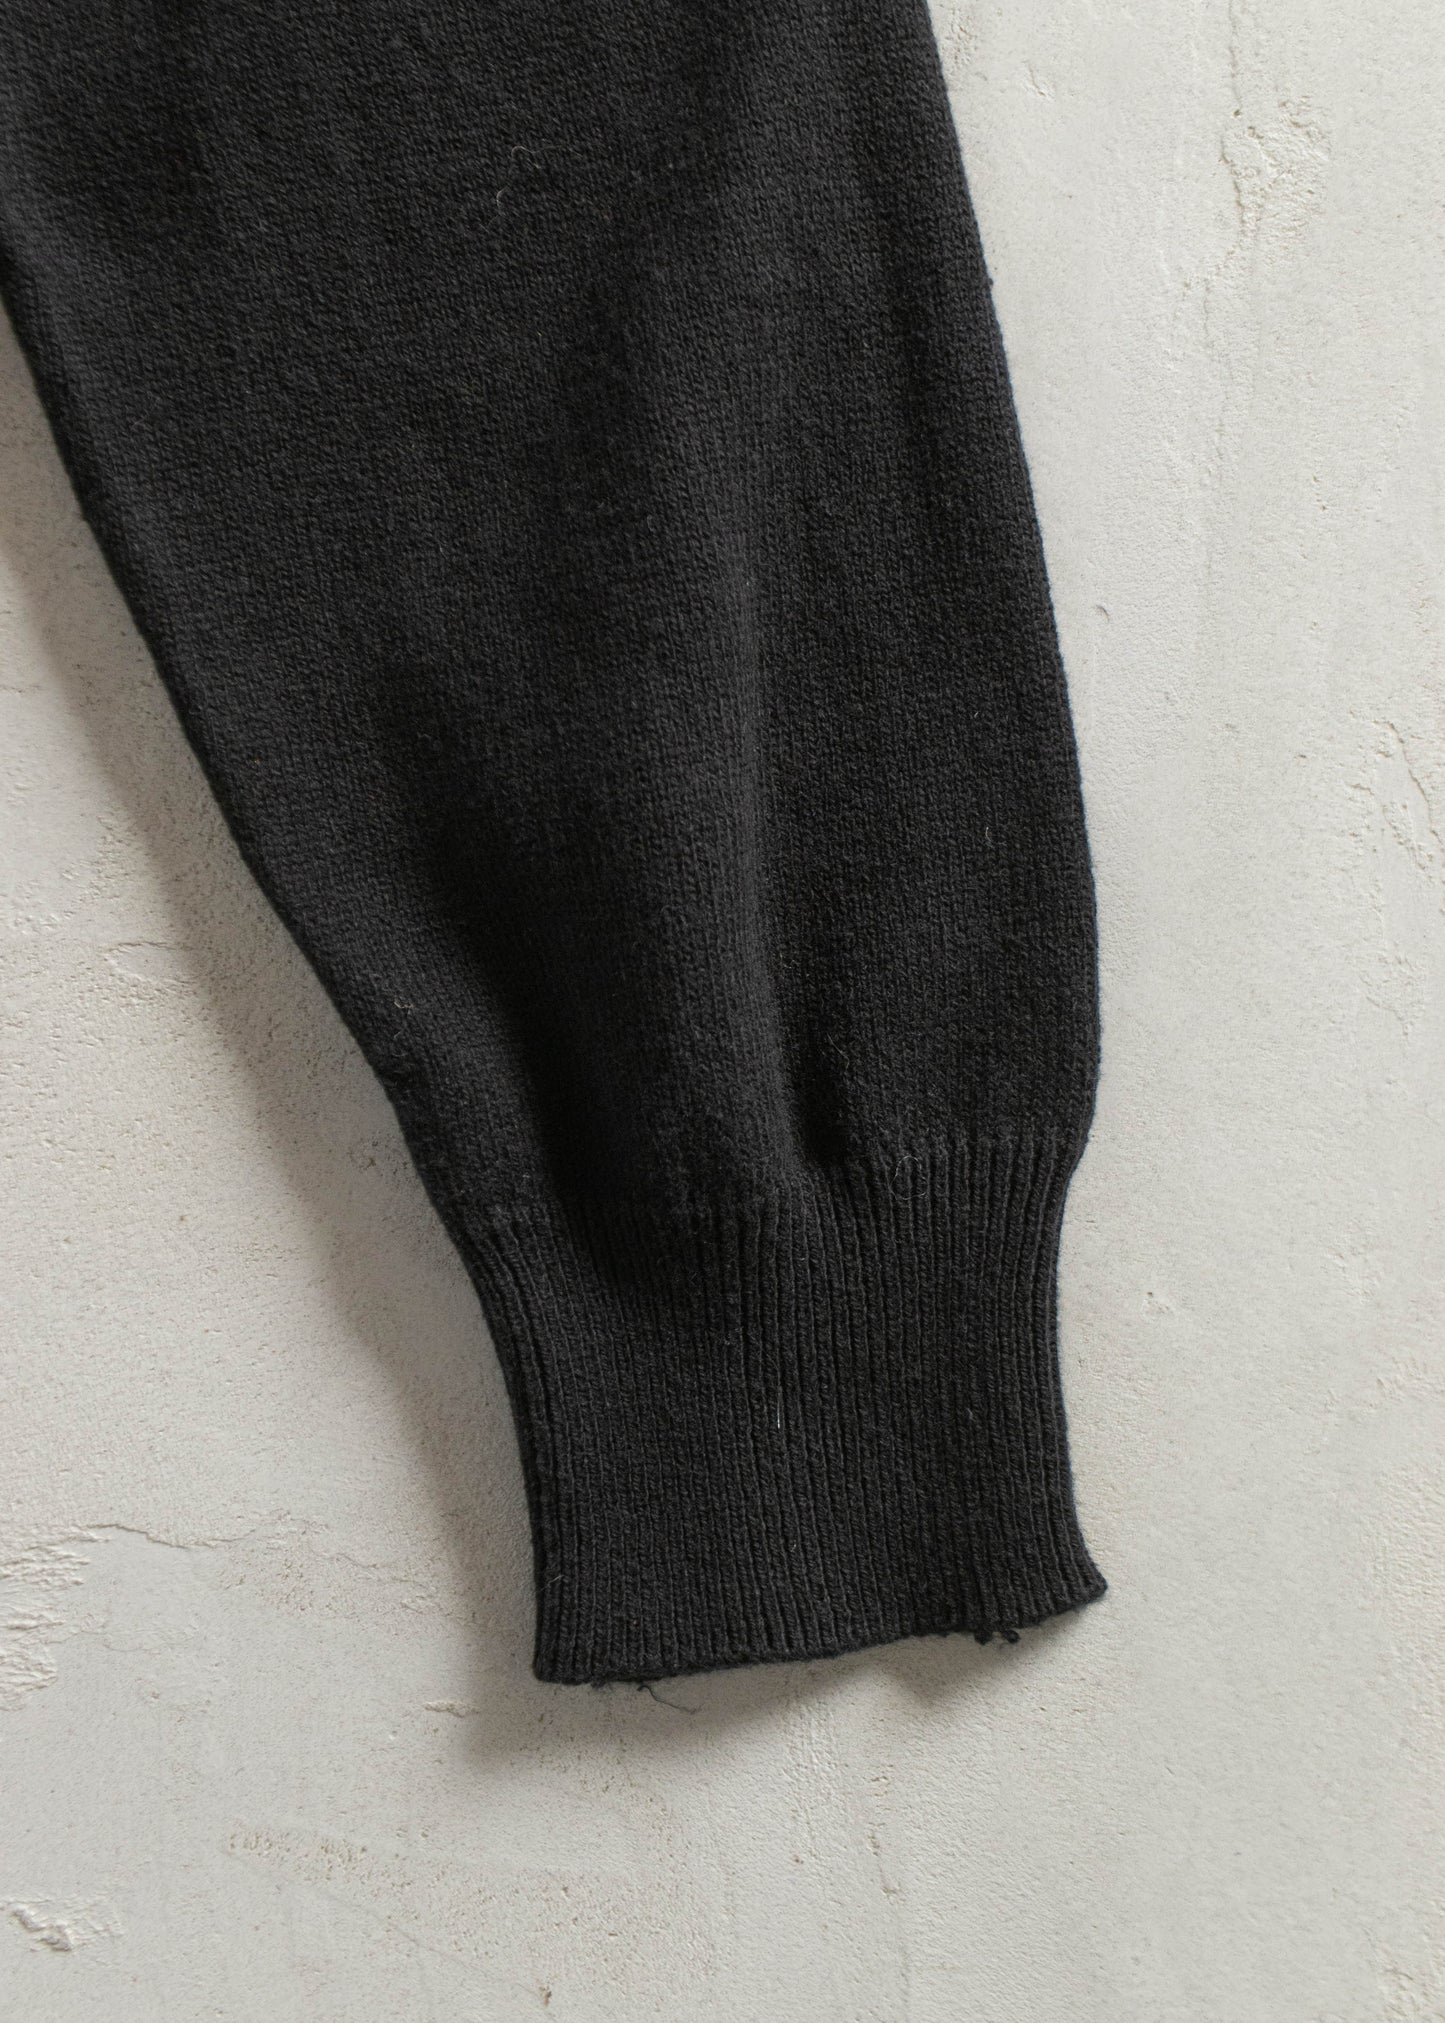 Vintage 1980s Knit Polo Sweater Size 2XS/XS